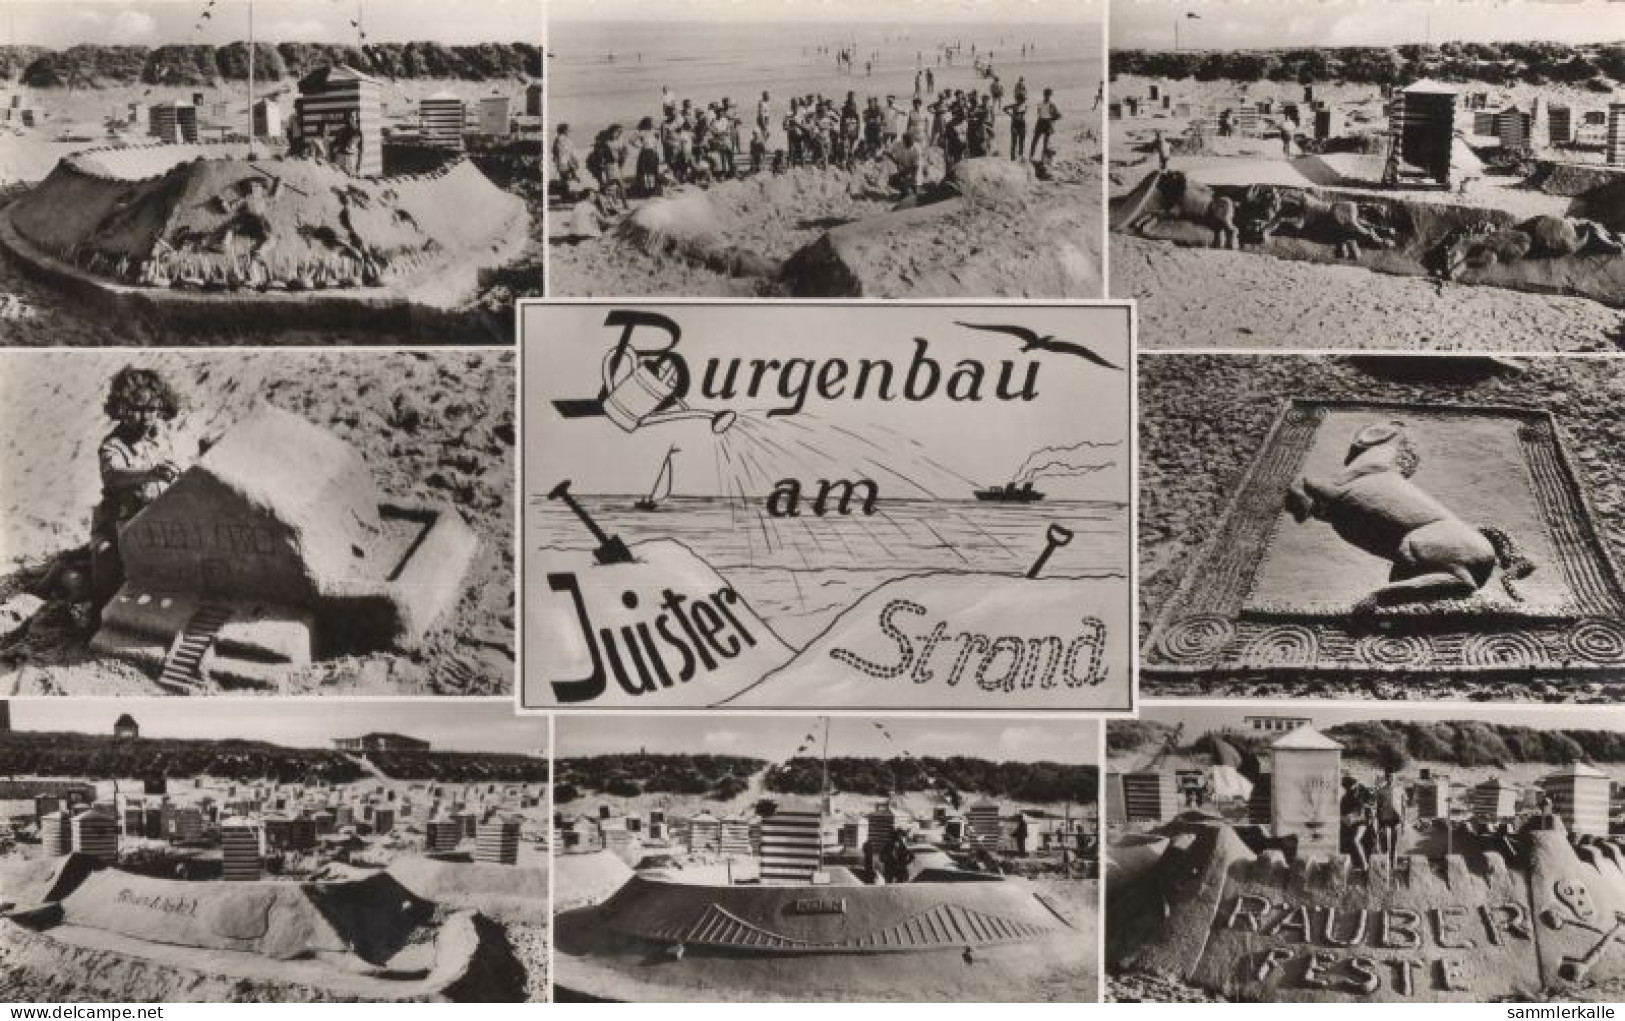 134193 - Juist - Burgenbau Sandburgen - Juist